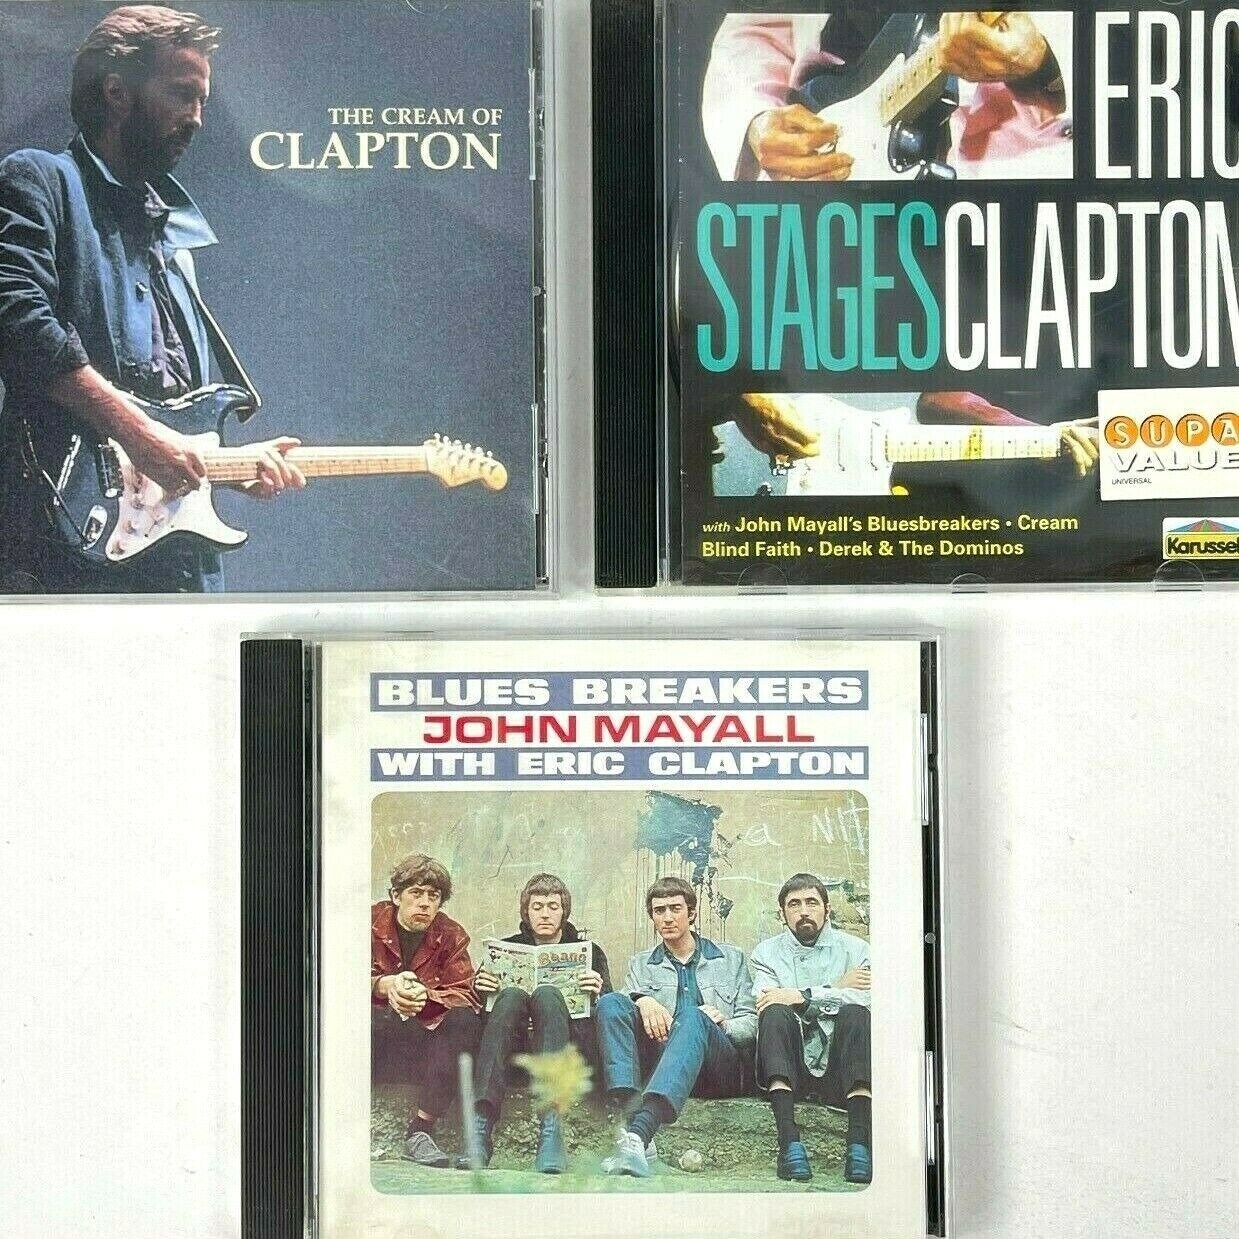 Eric Clapton Playing Guitar  8x10 Glossy Photo